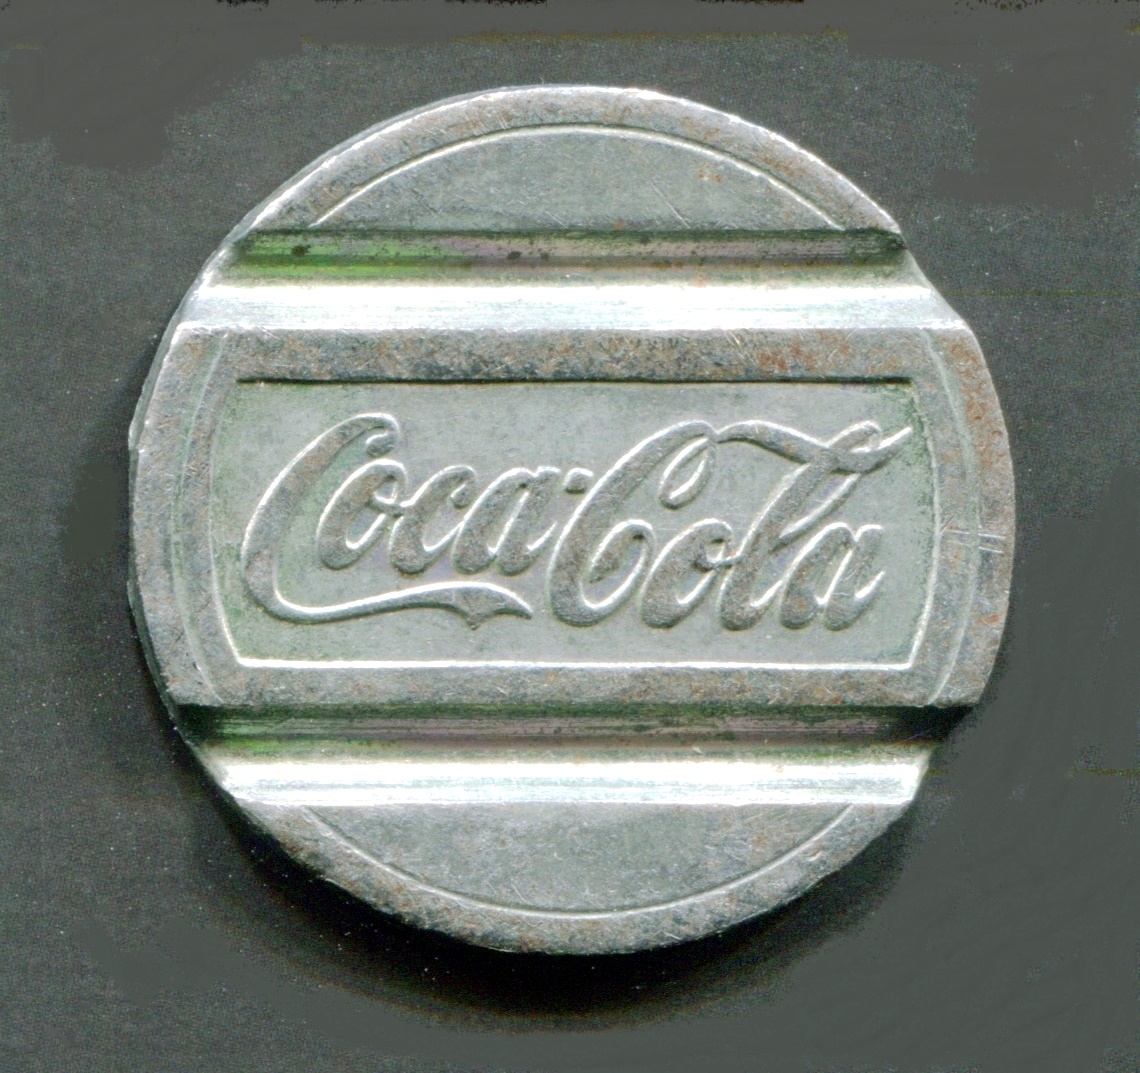 Coca15B.jpg